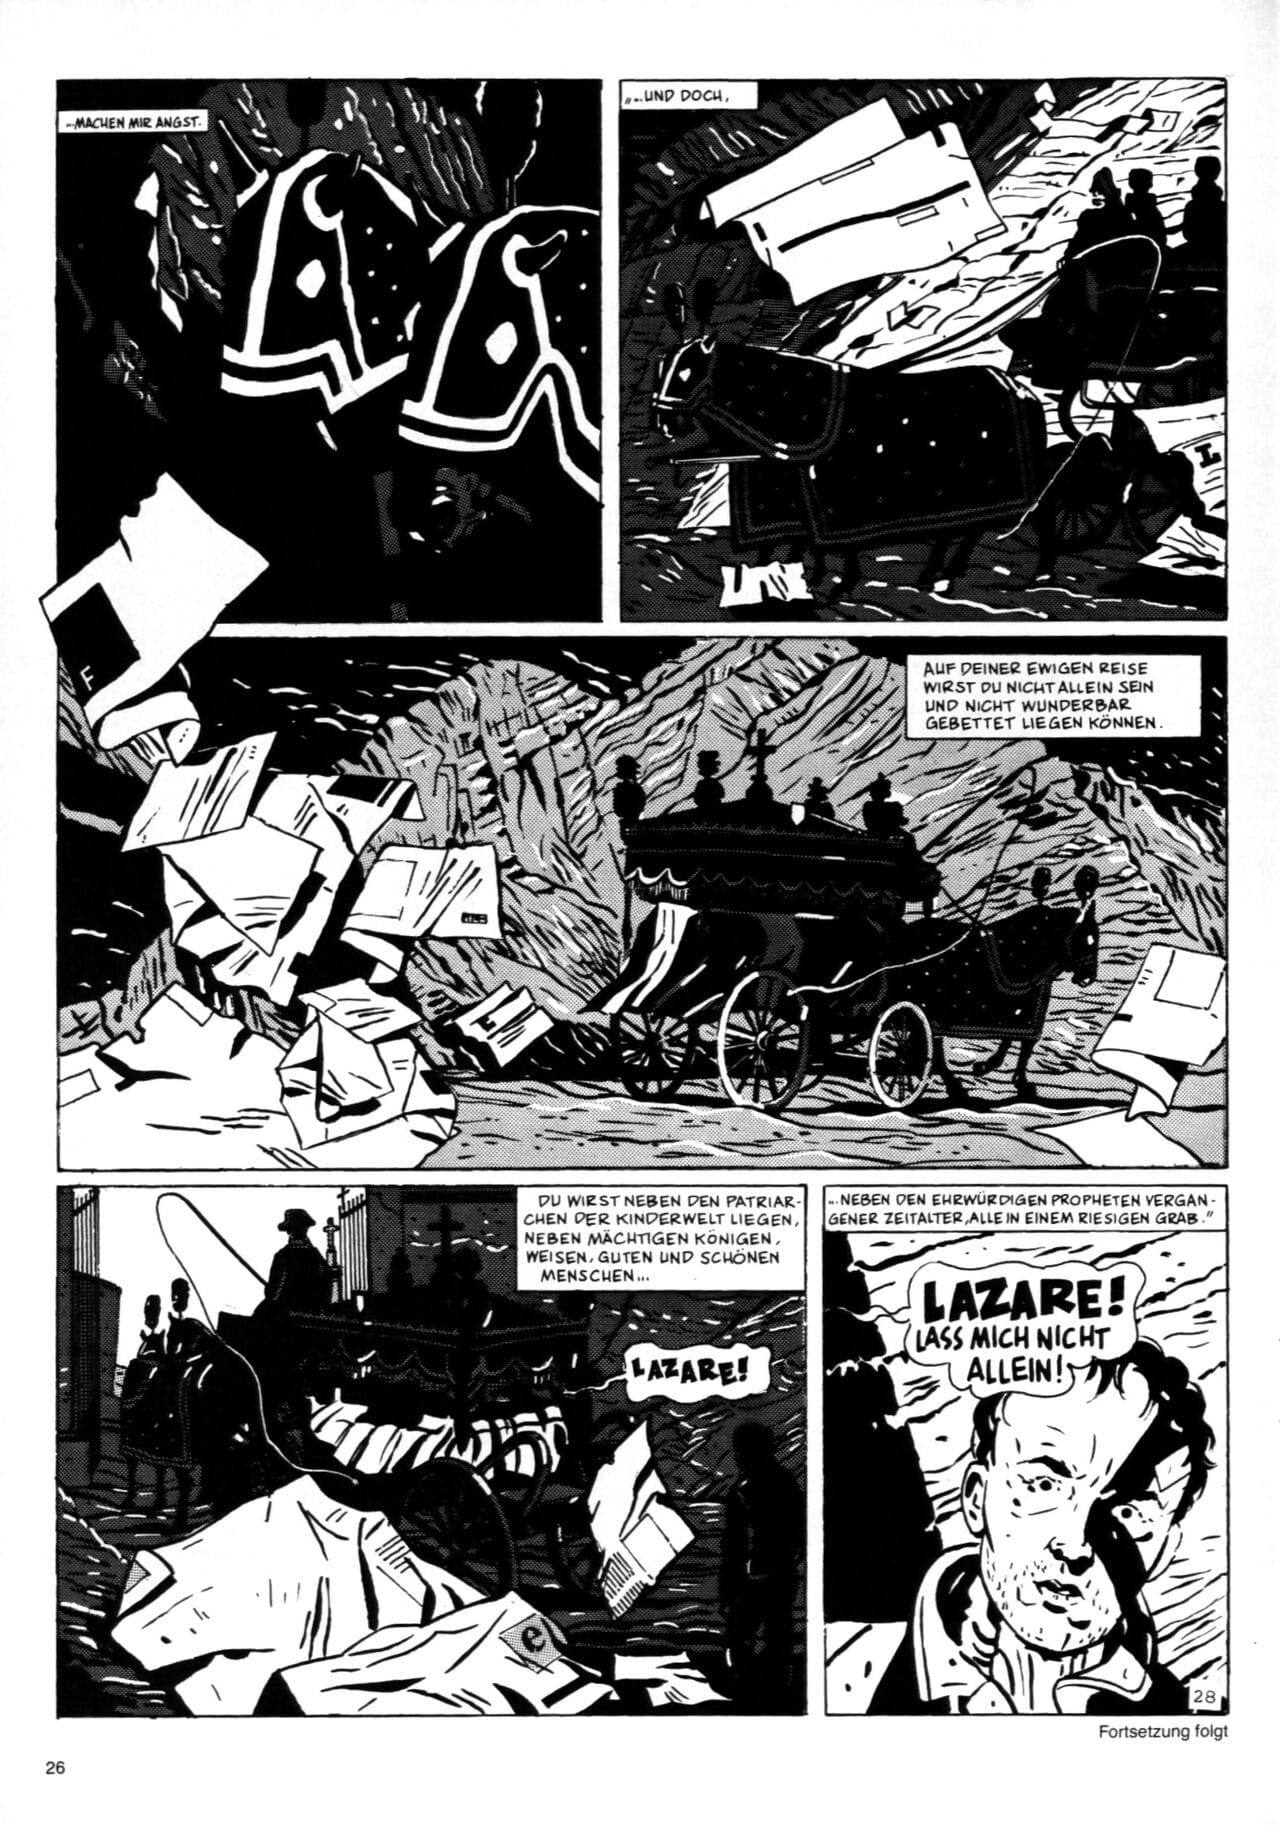 schwermetall #095 Teil 2 page 1